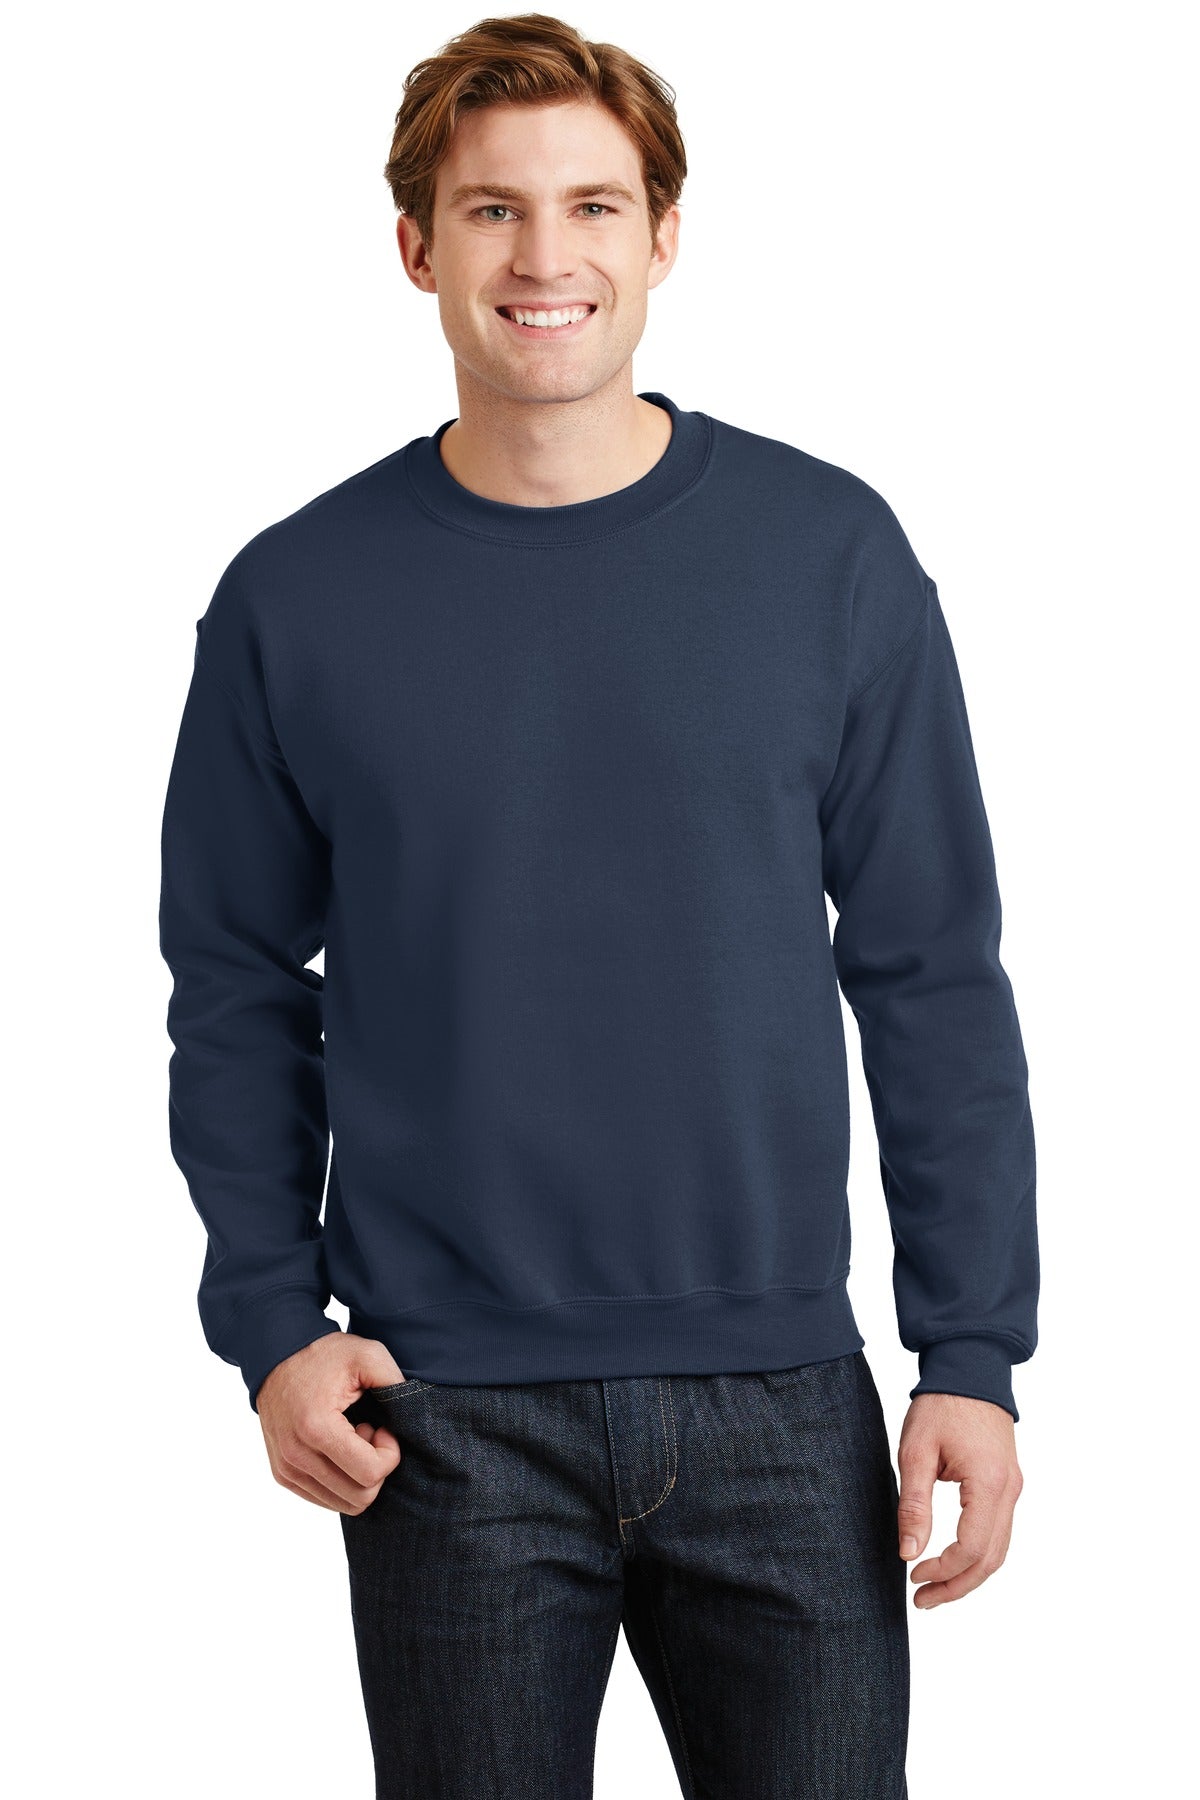 Gildan Men's Collar Double Needle Pocket Knit T-Shirt, Black, S